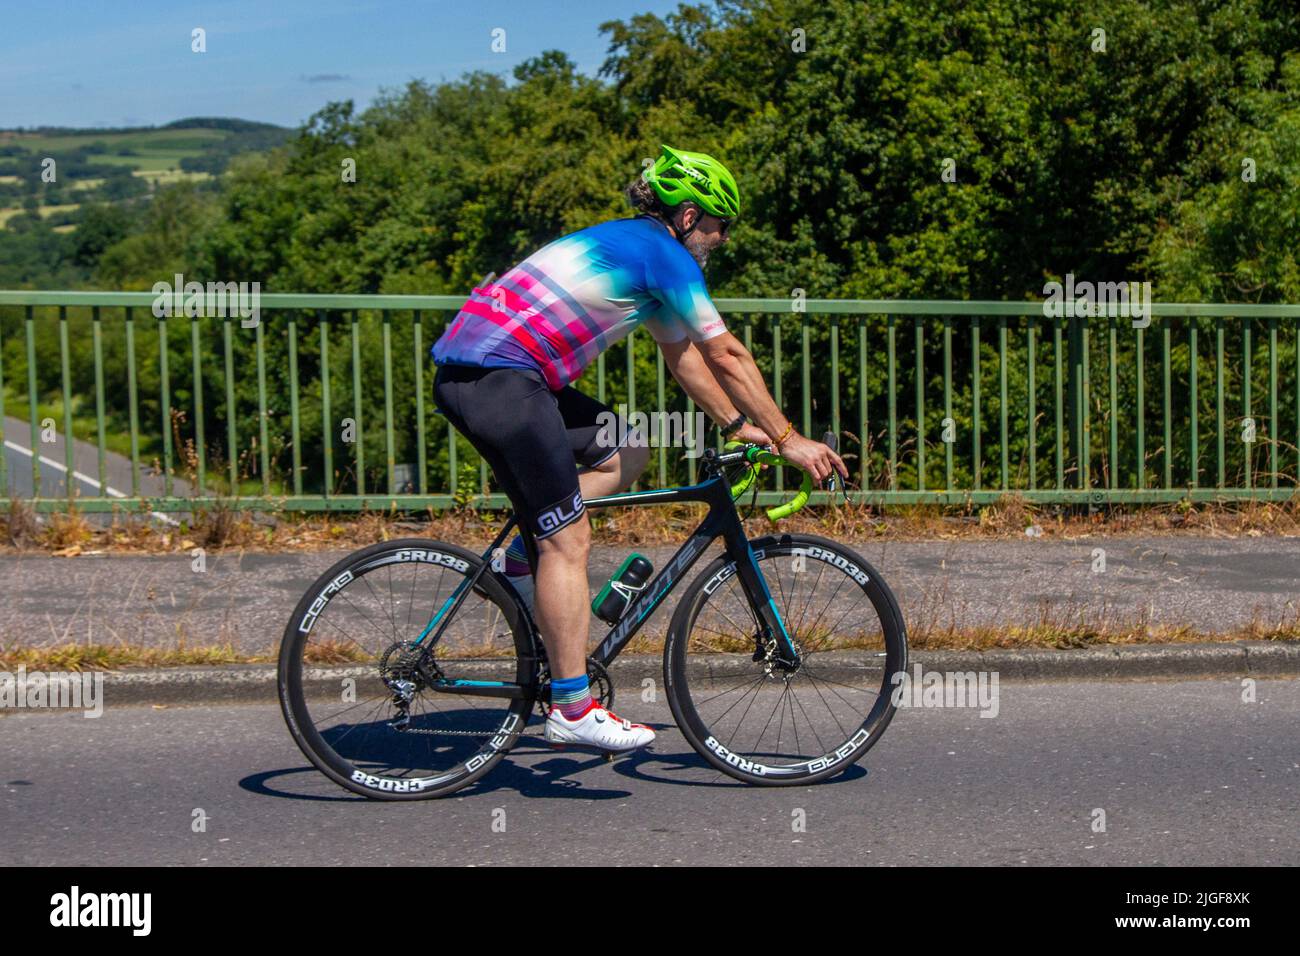 WHYTE carbon fibre bike rider. Stock Photo